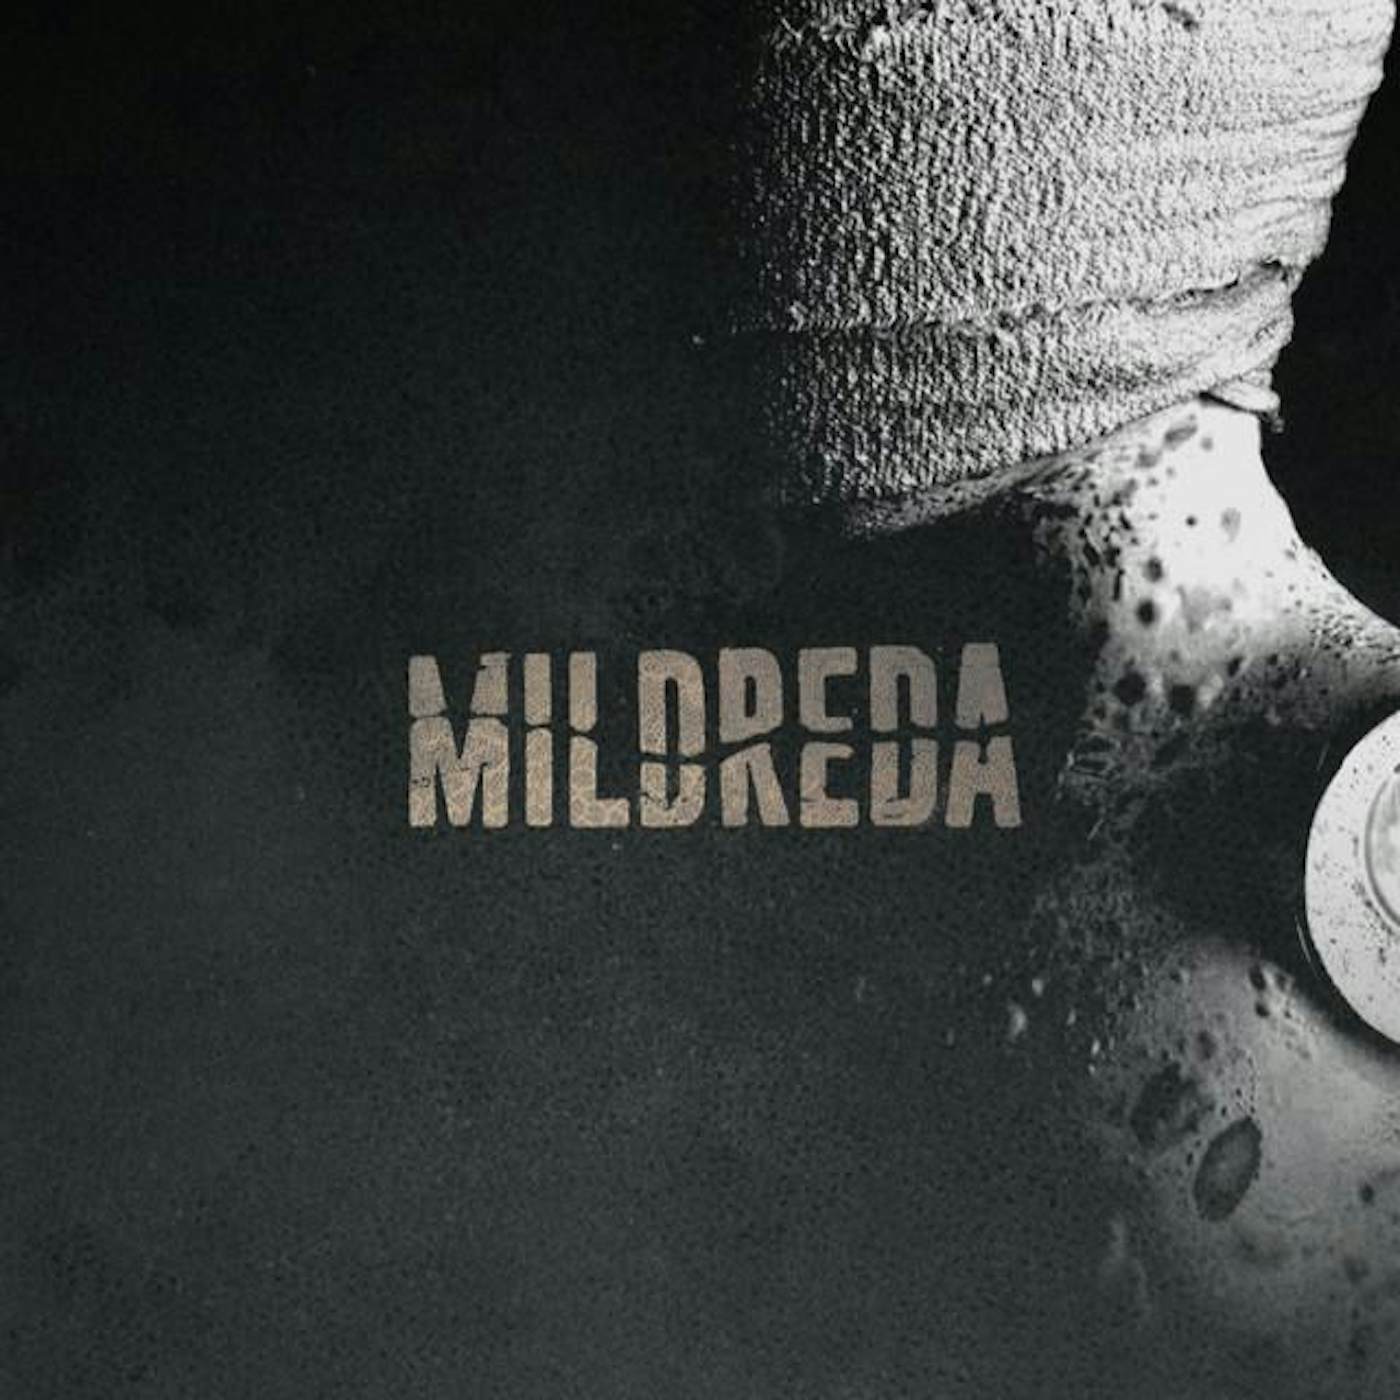 Mildreda